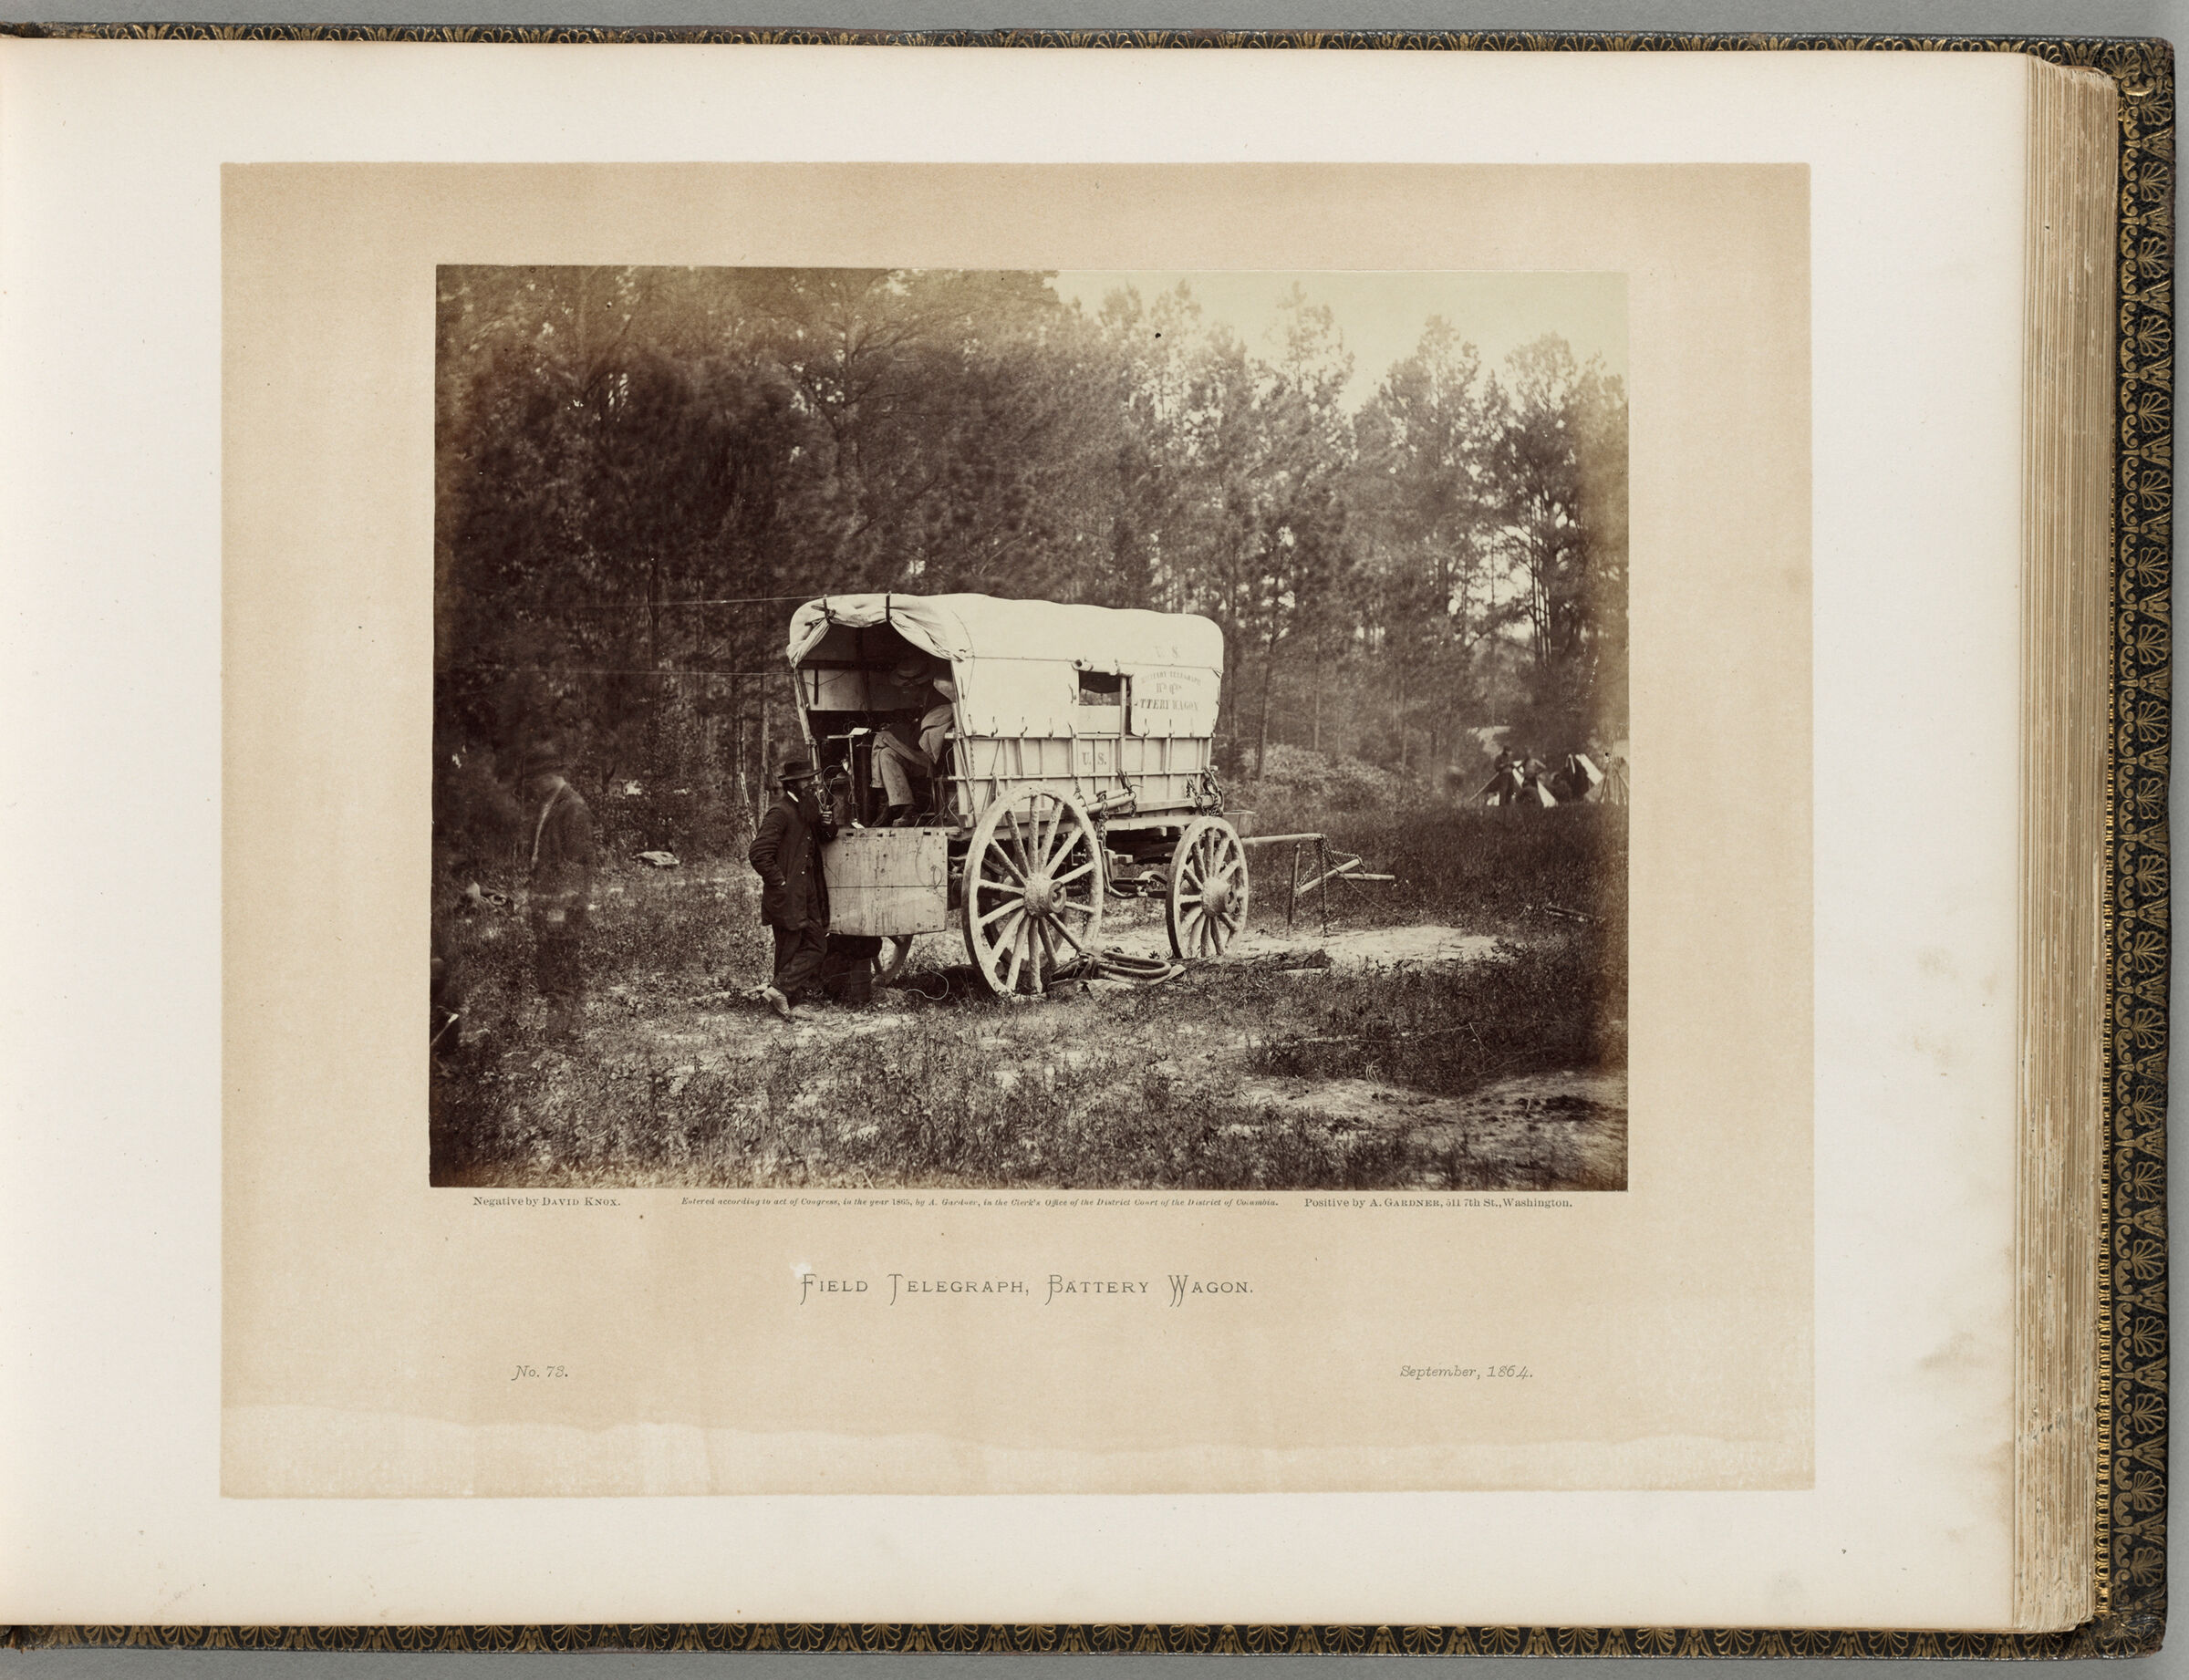 Field Telegraph, Battery Wagon